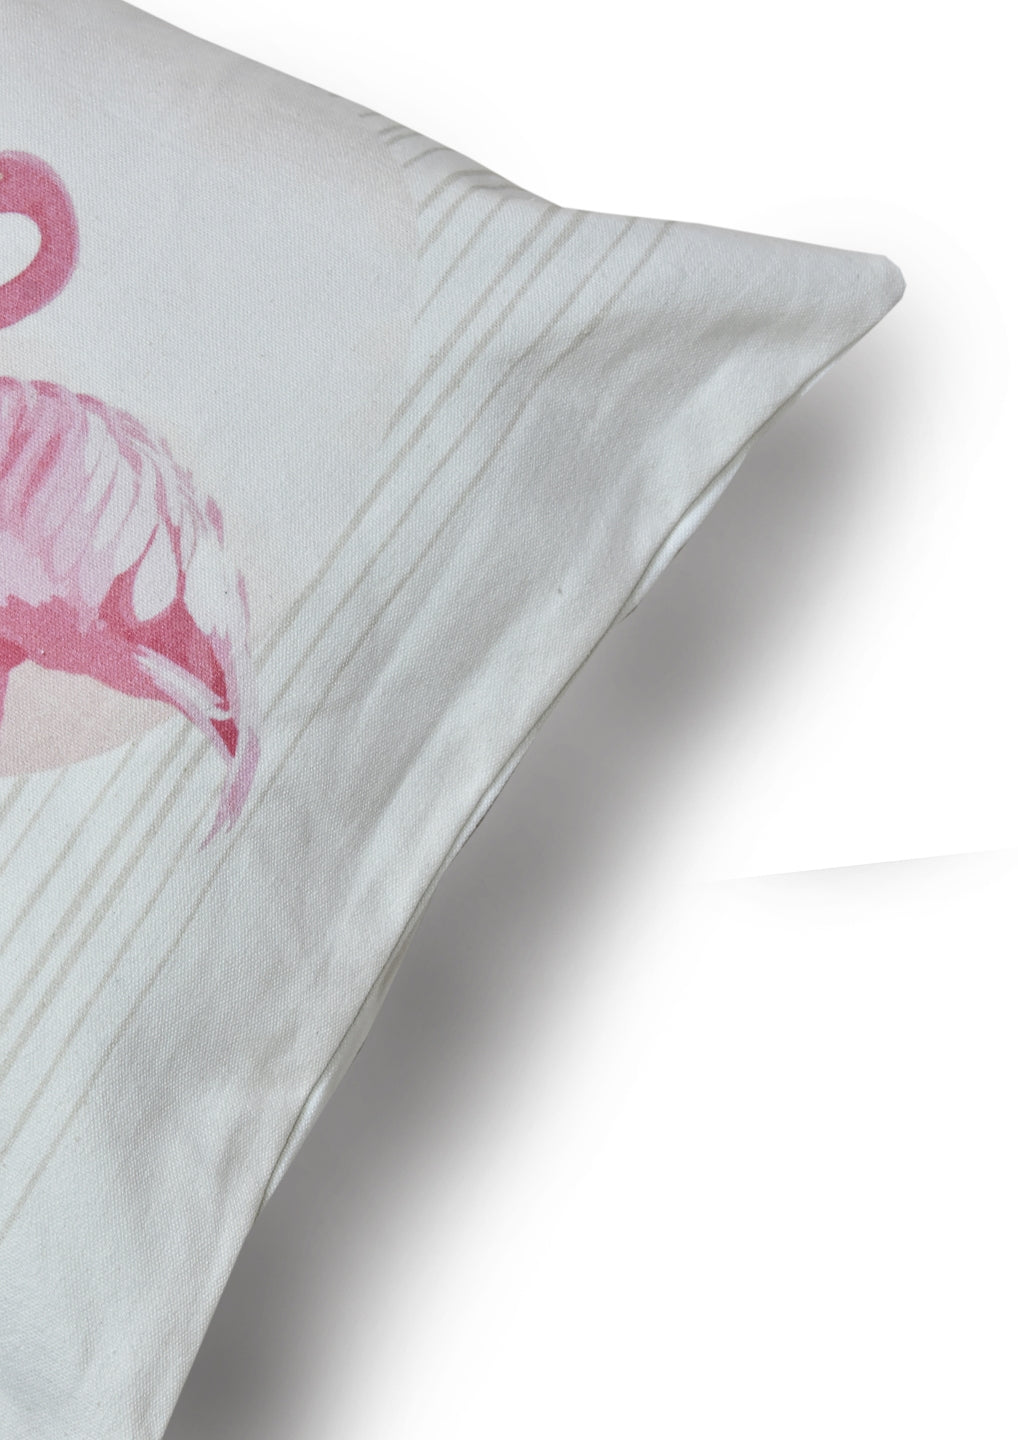 Flamingo Print Set of 2 Cushion Cover